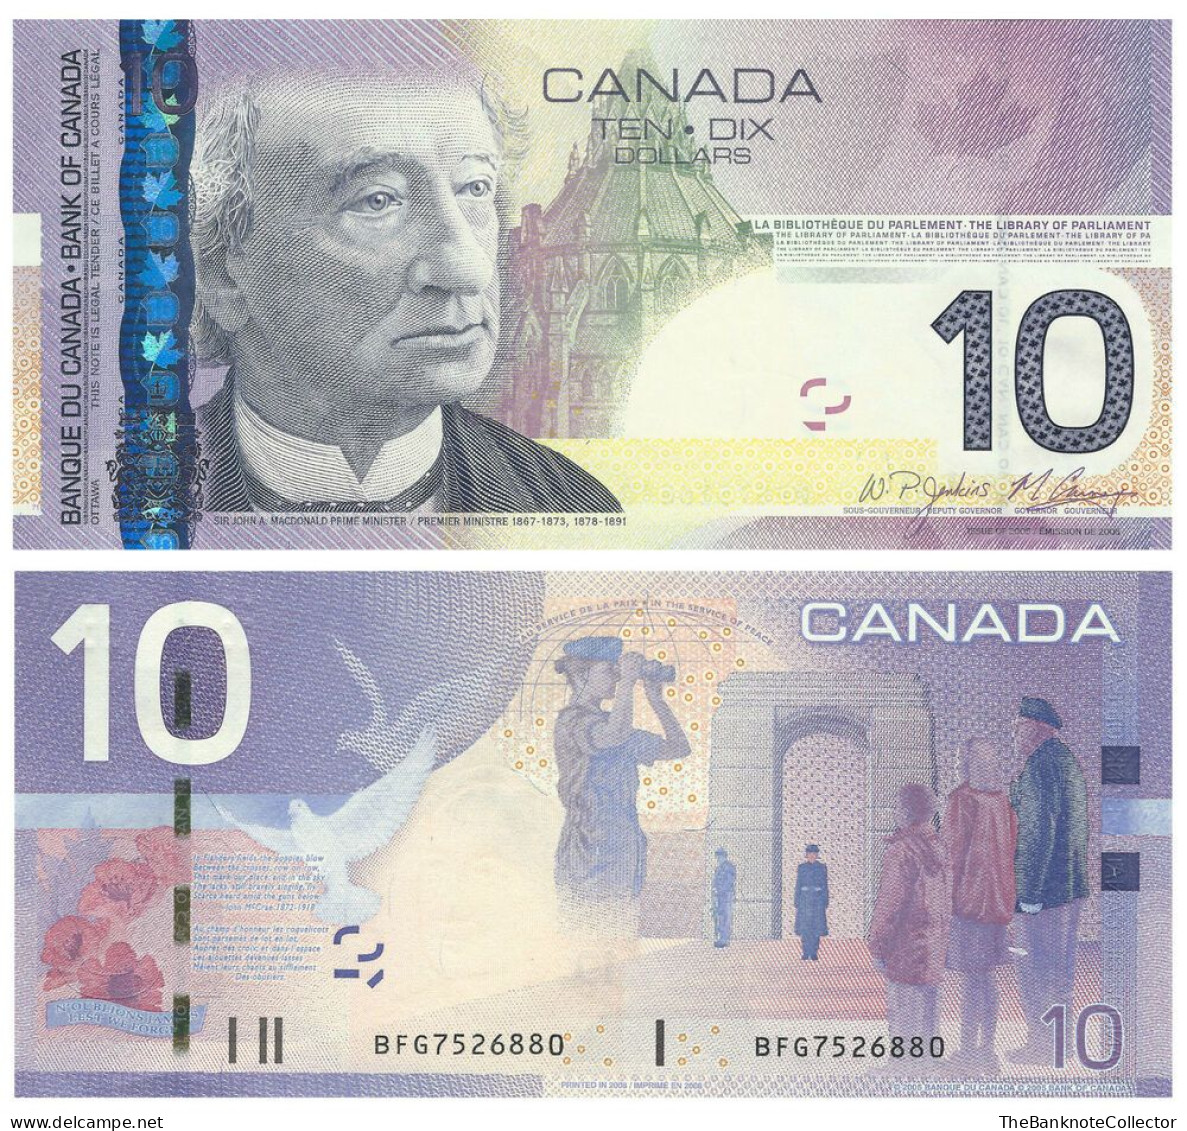 Canada 5 Dollars ND 2005 P-102 UNC - Canada